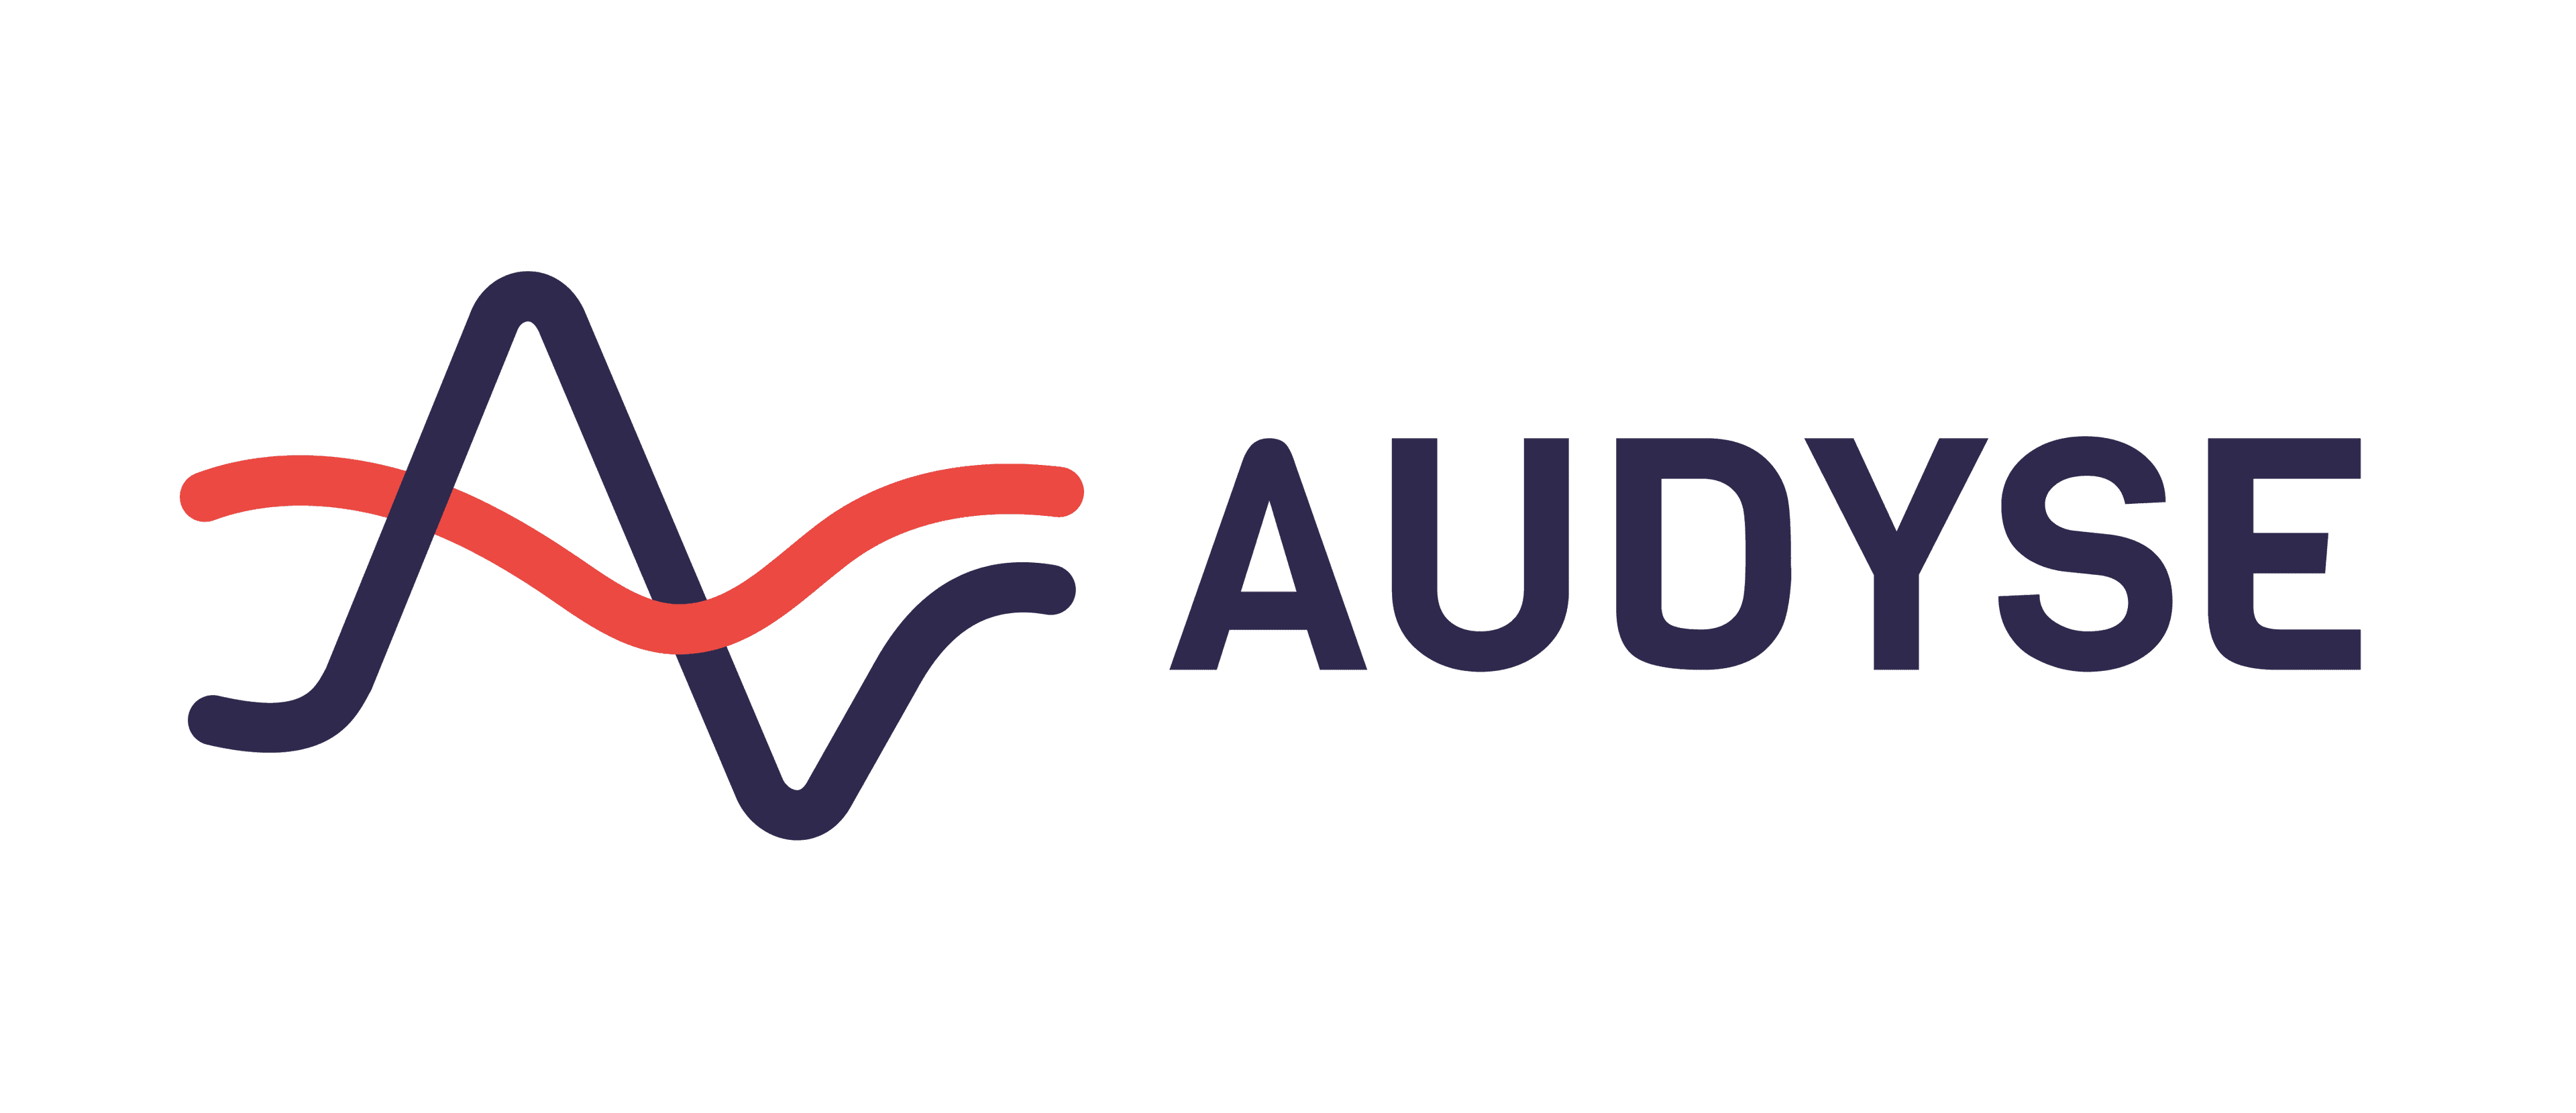 Product Audyse's Noise Filtering Headset | Audyse Technology image